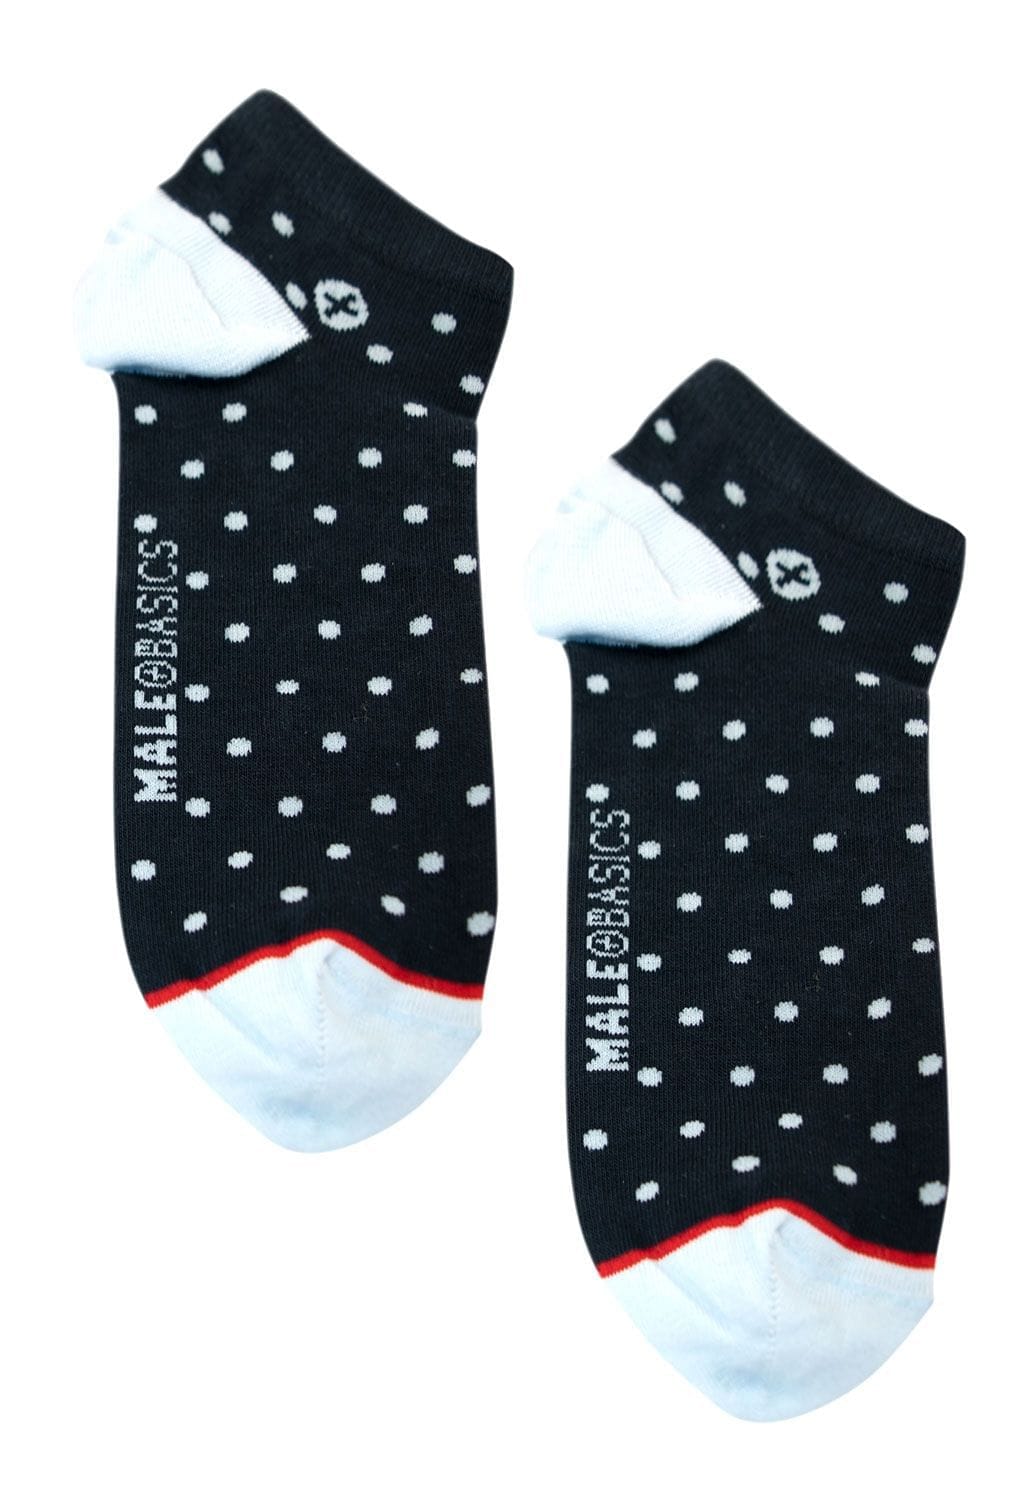 MaleBasics Ankle Sock-Dotted - G UNDIE